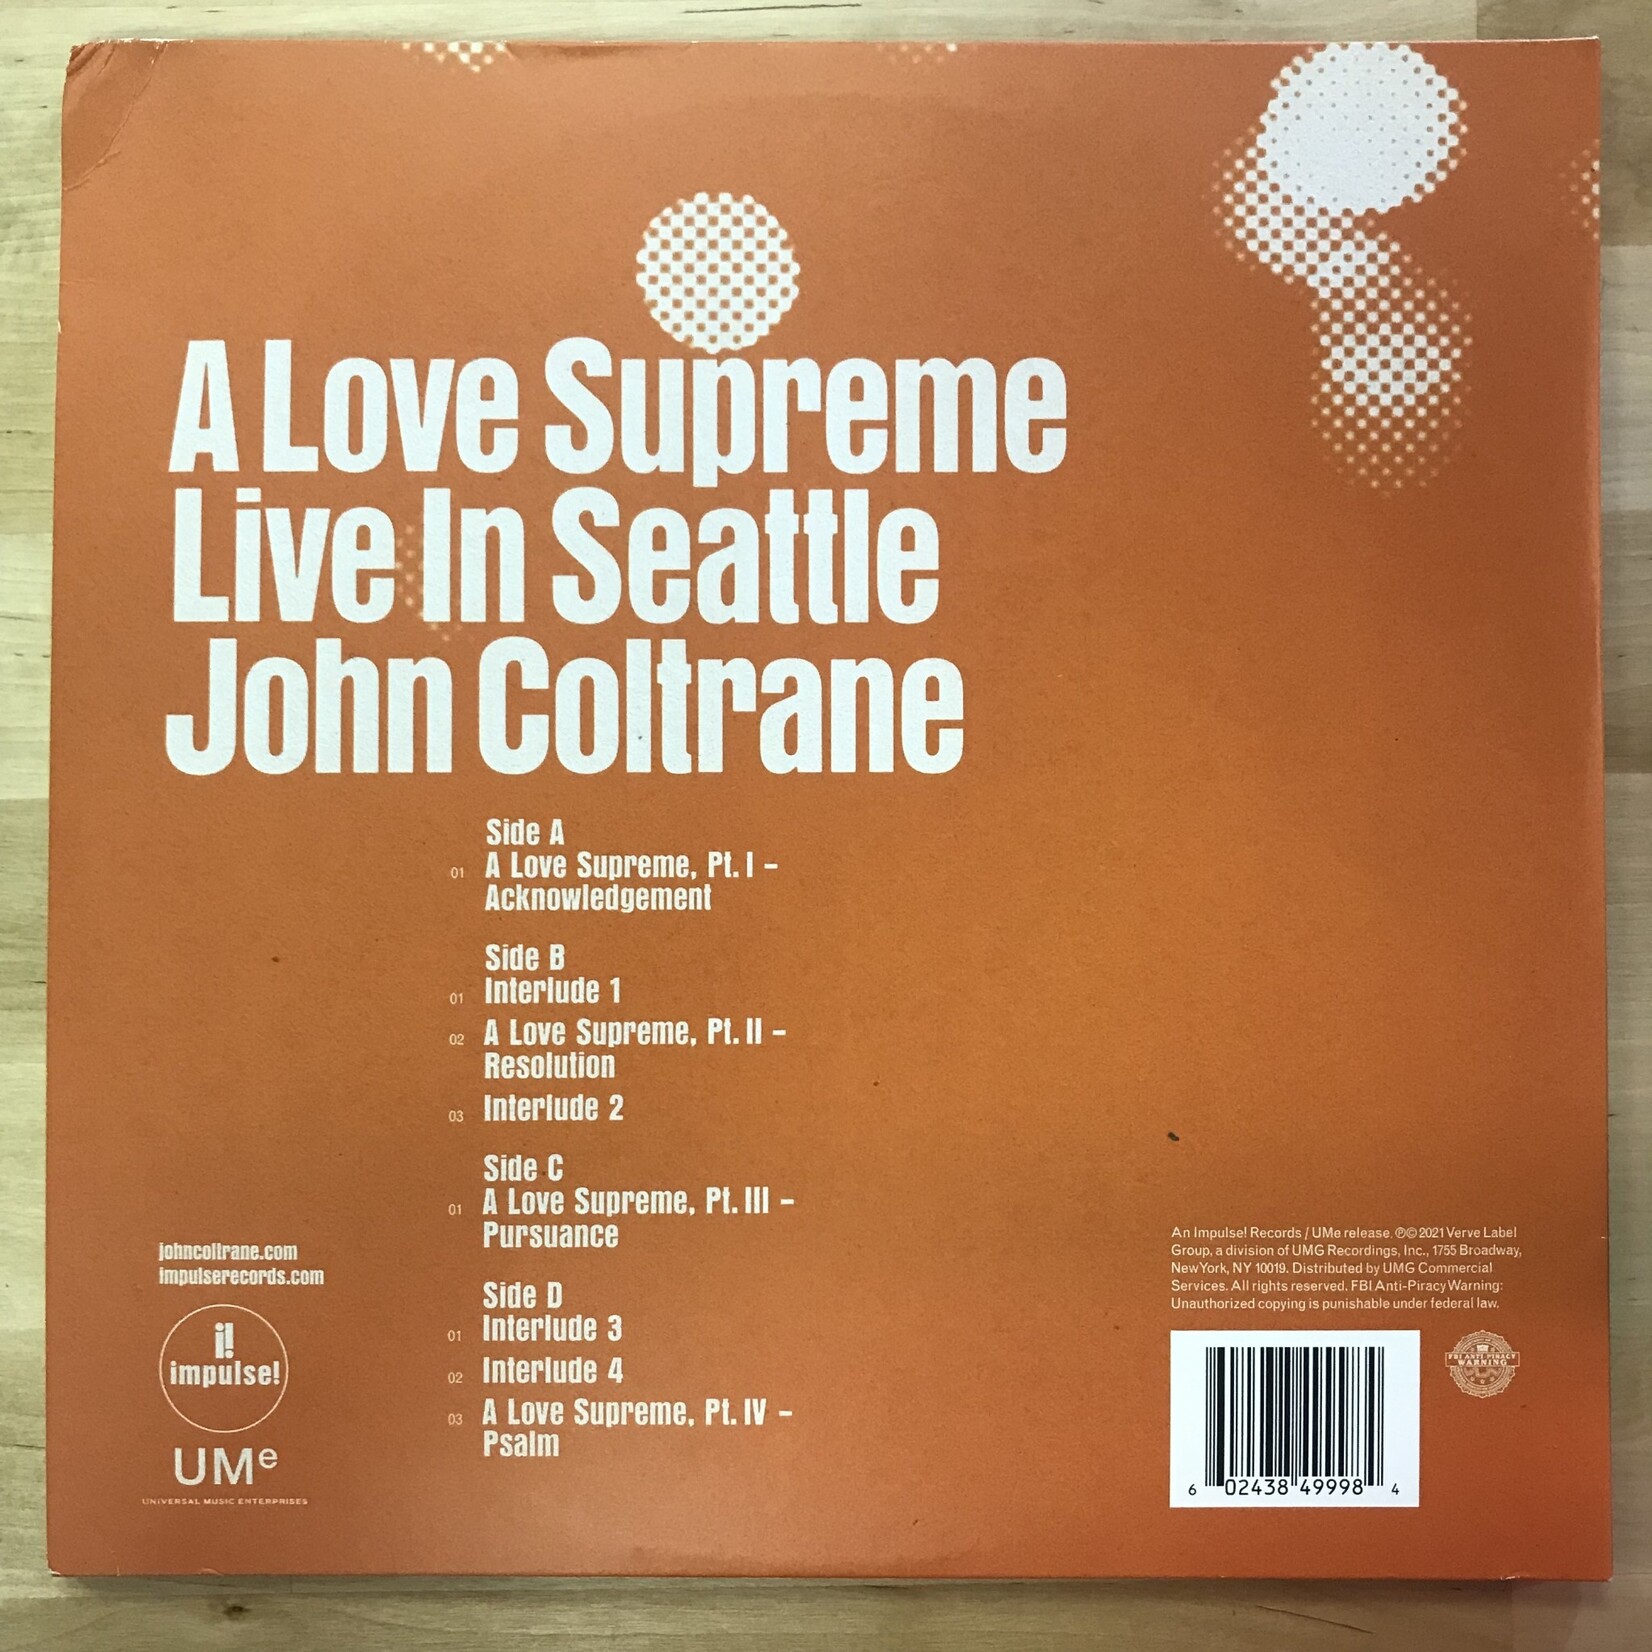 John Coltrane - A Love Supreme Live In Seattle - B0034291 01 - Vinyl LP (USED)